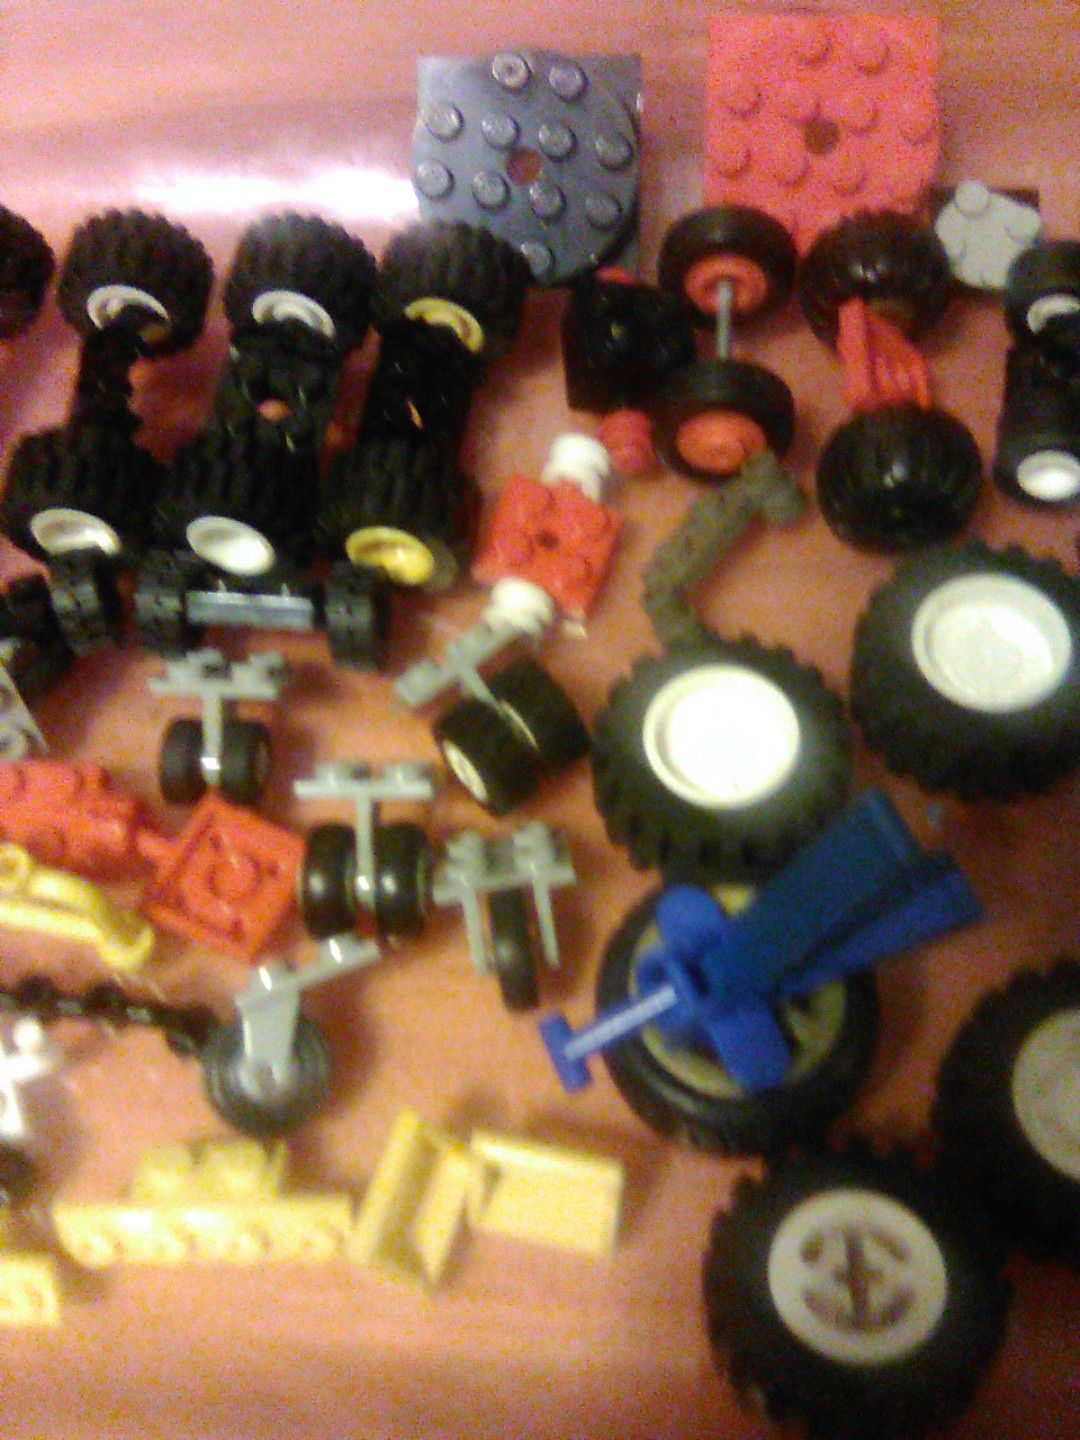 Lego wheels, landing gear, & car parts